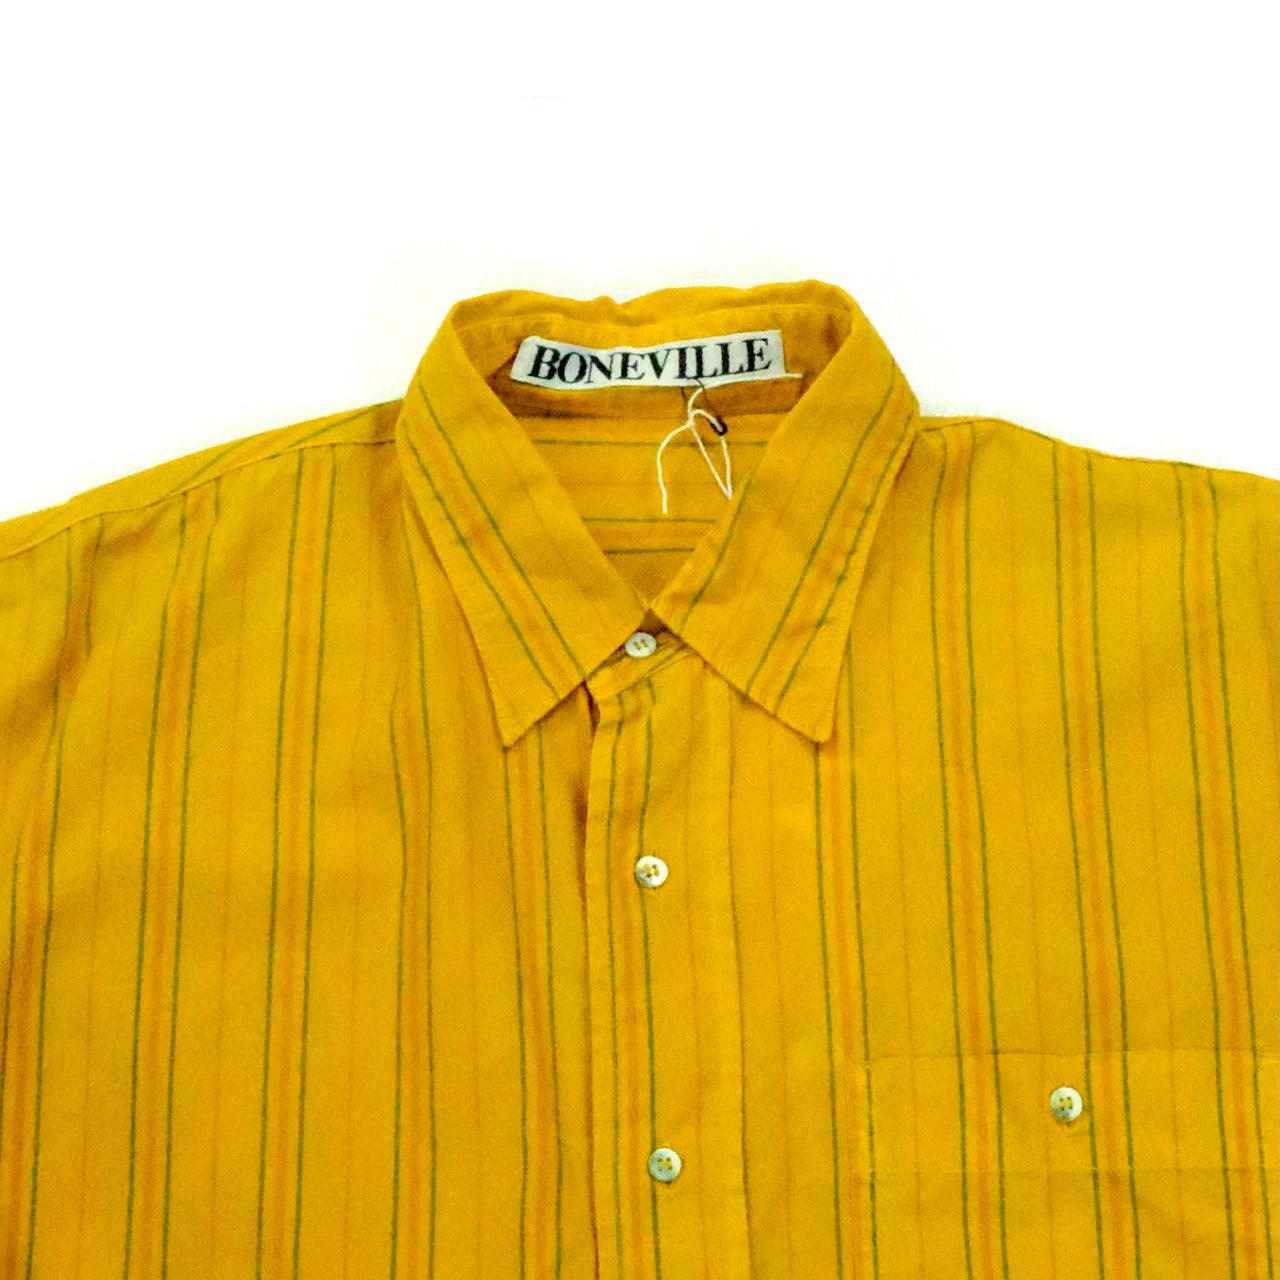 Boneville Striped Shirt